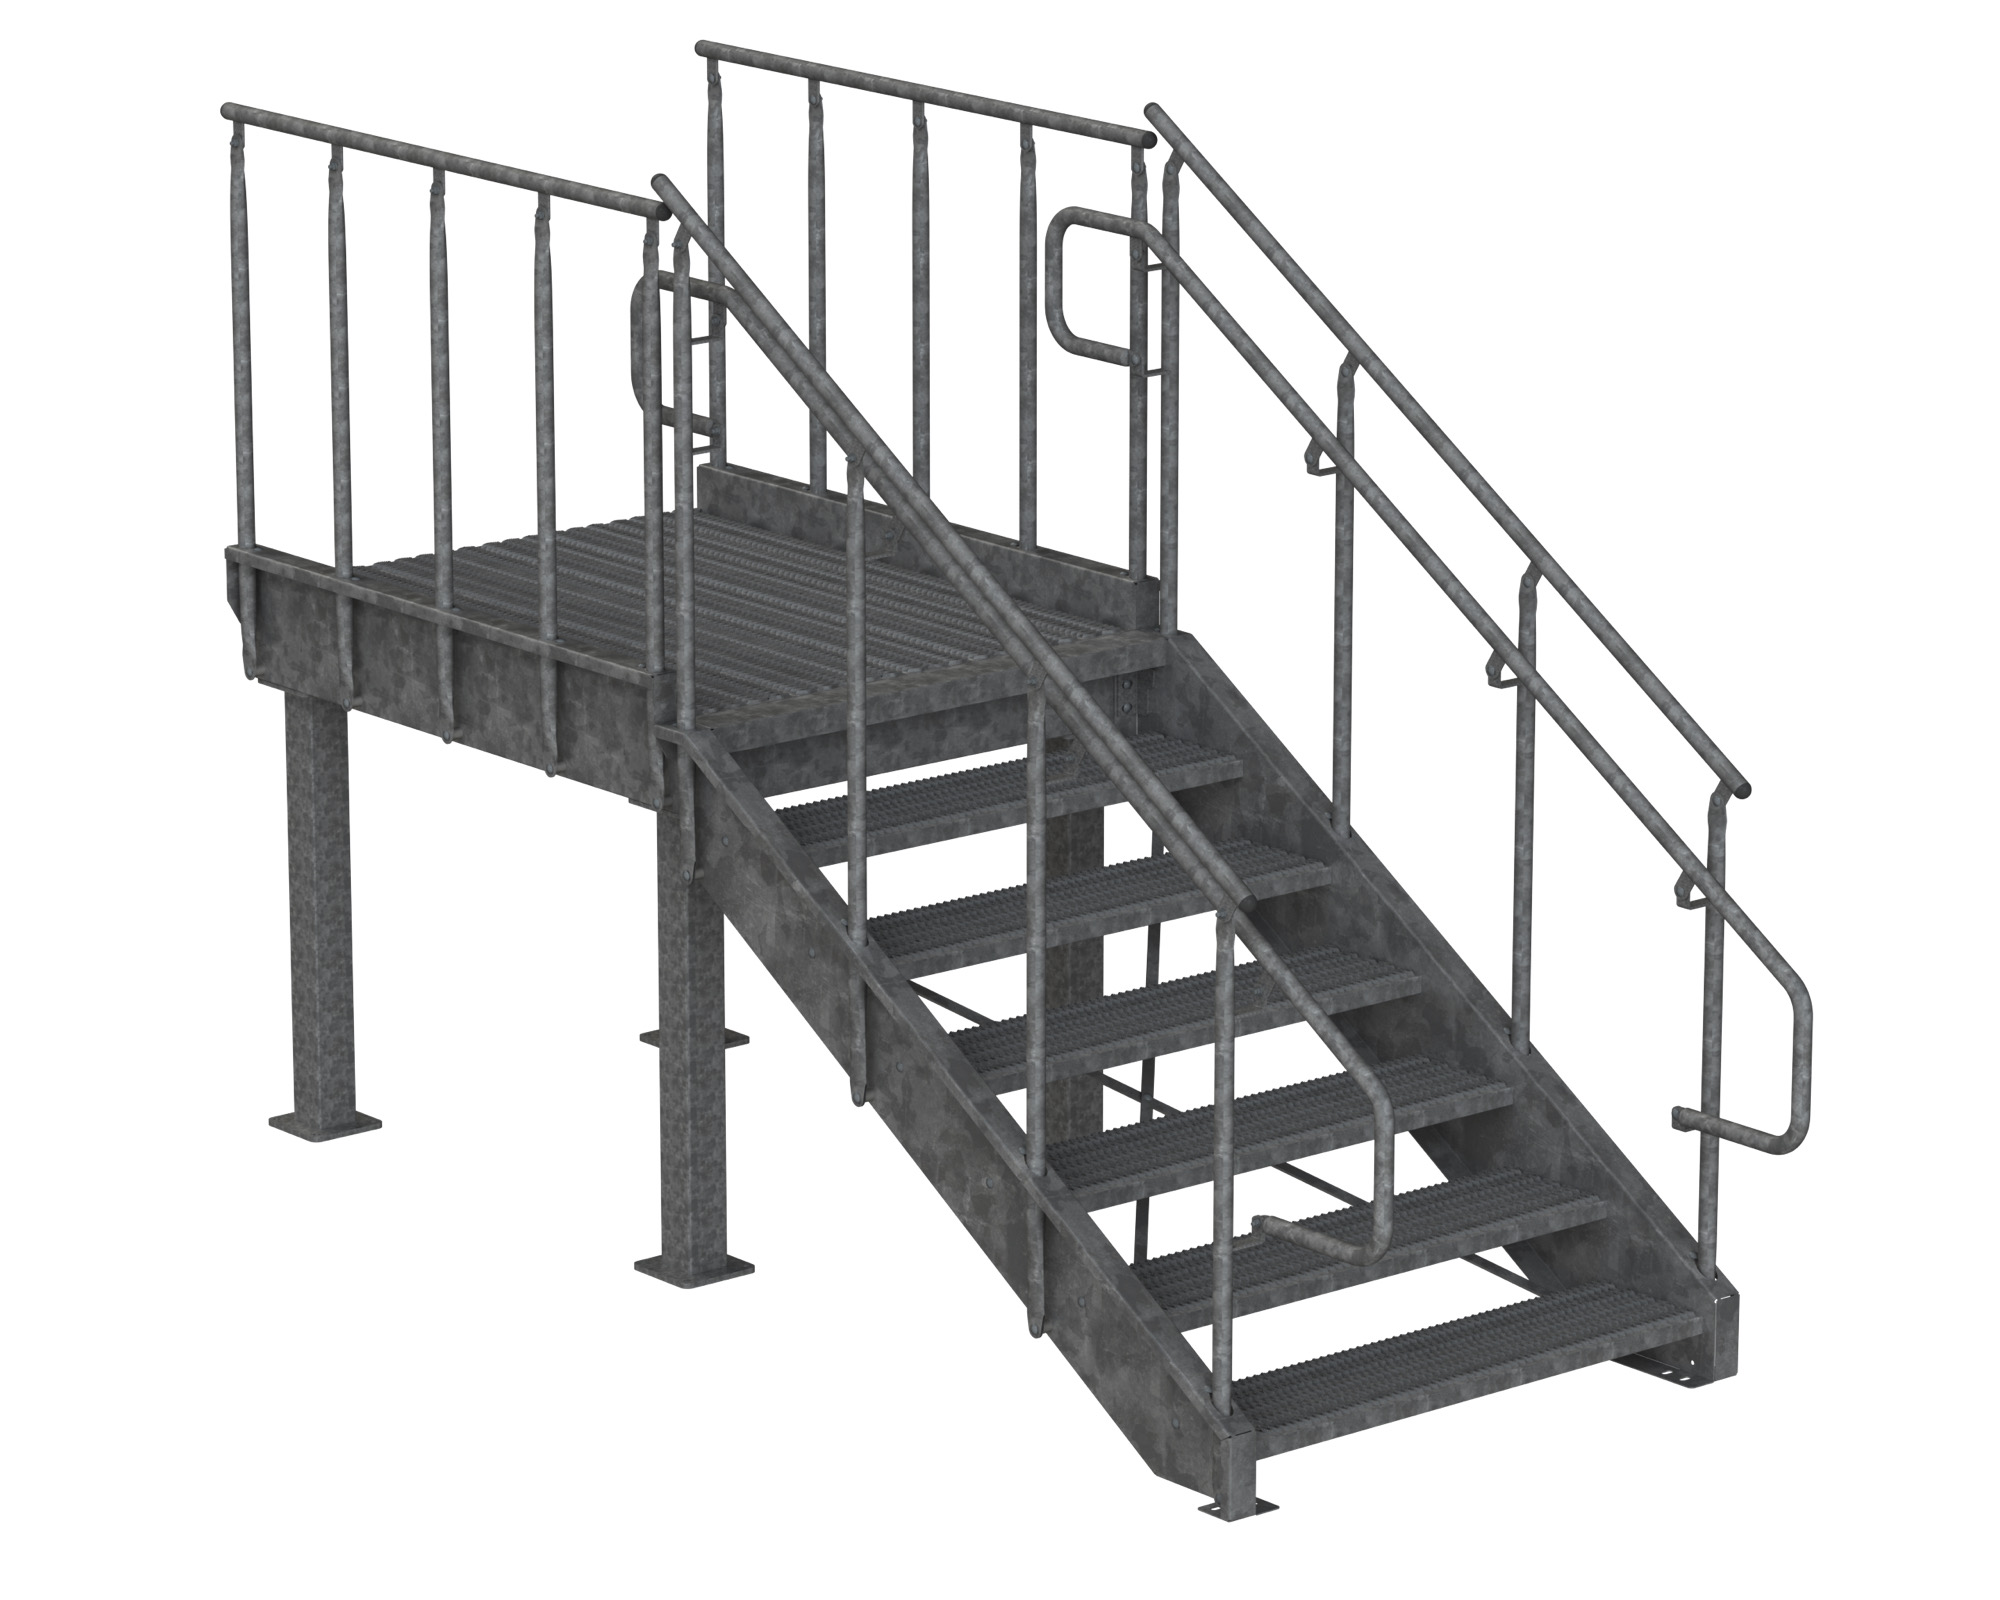 Loading Dock Stairs, Steel, Galvanized, Grip Strut, IBC-Industrial, Door Swing Platform